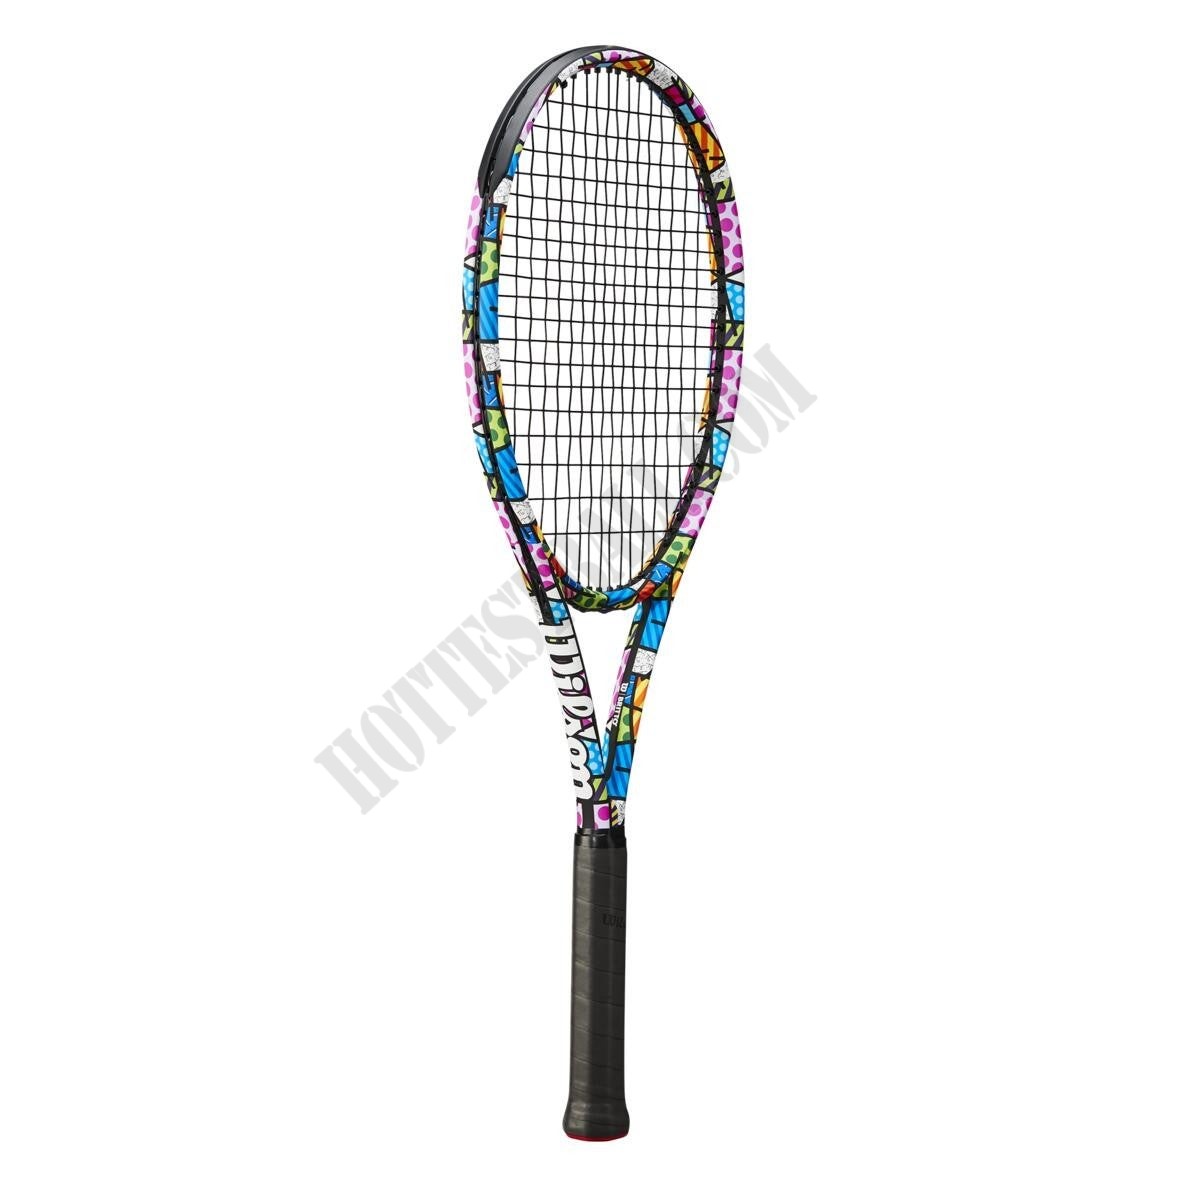 Britto Clash 100 Tennis Racket - Pre-strung - Wilson Discount Store - Britto Clash 100 Tennis Racket - Pre-strung - Wilson Discount Store